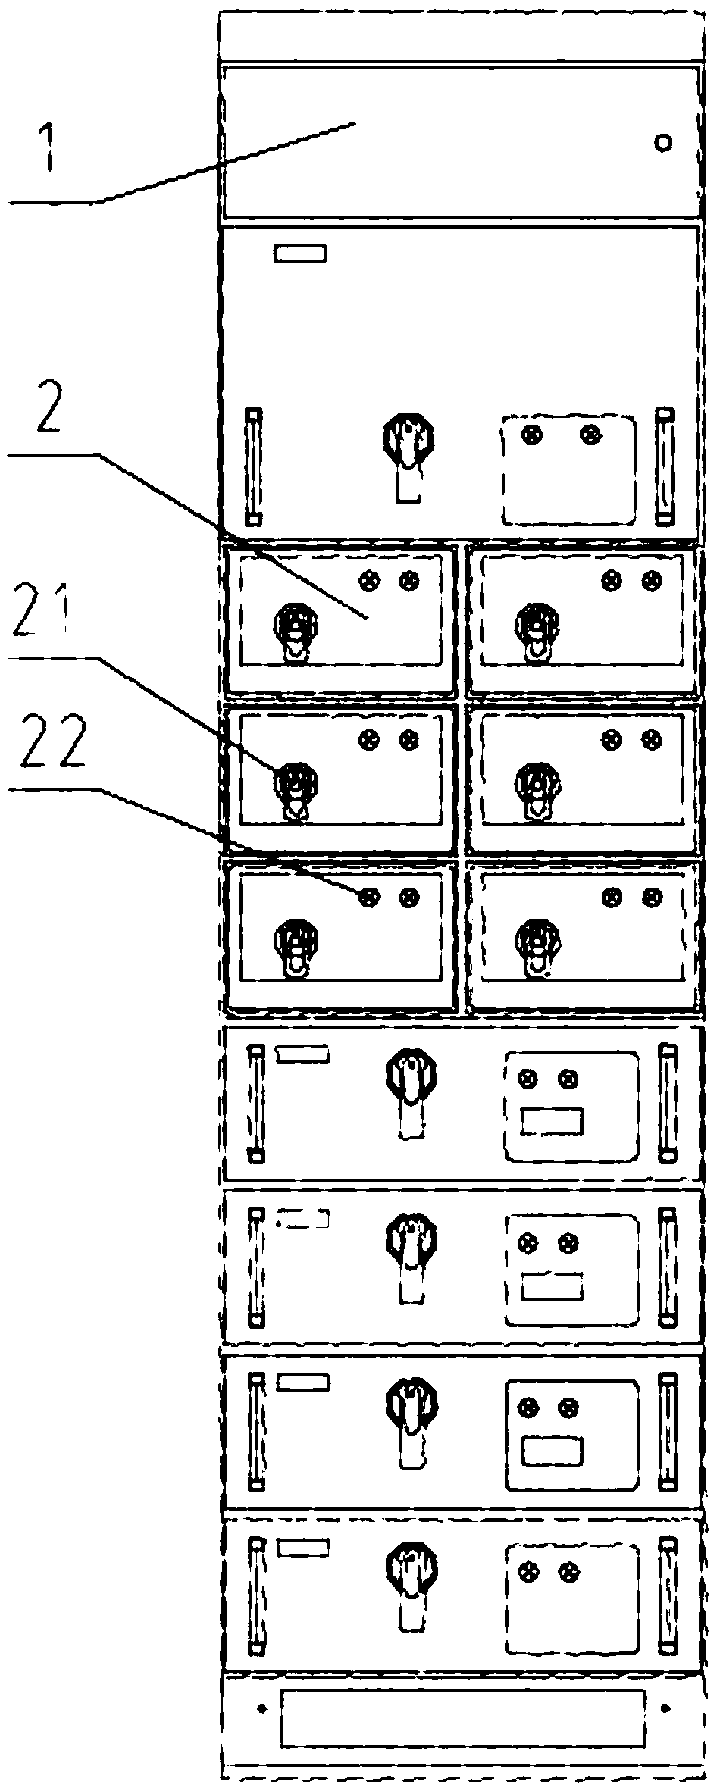 Universal switch cabinet